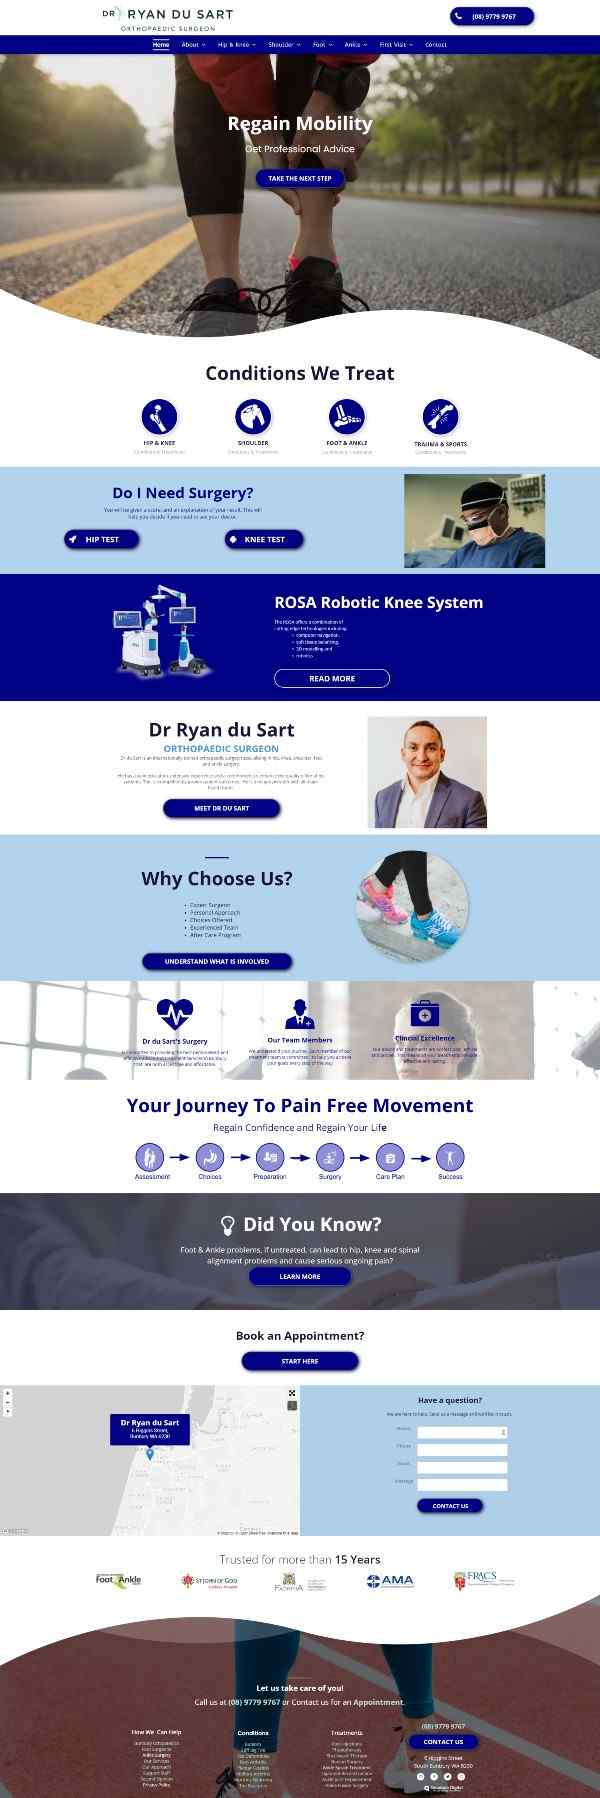 About Dr. Ryan du Sart